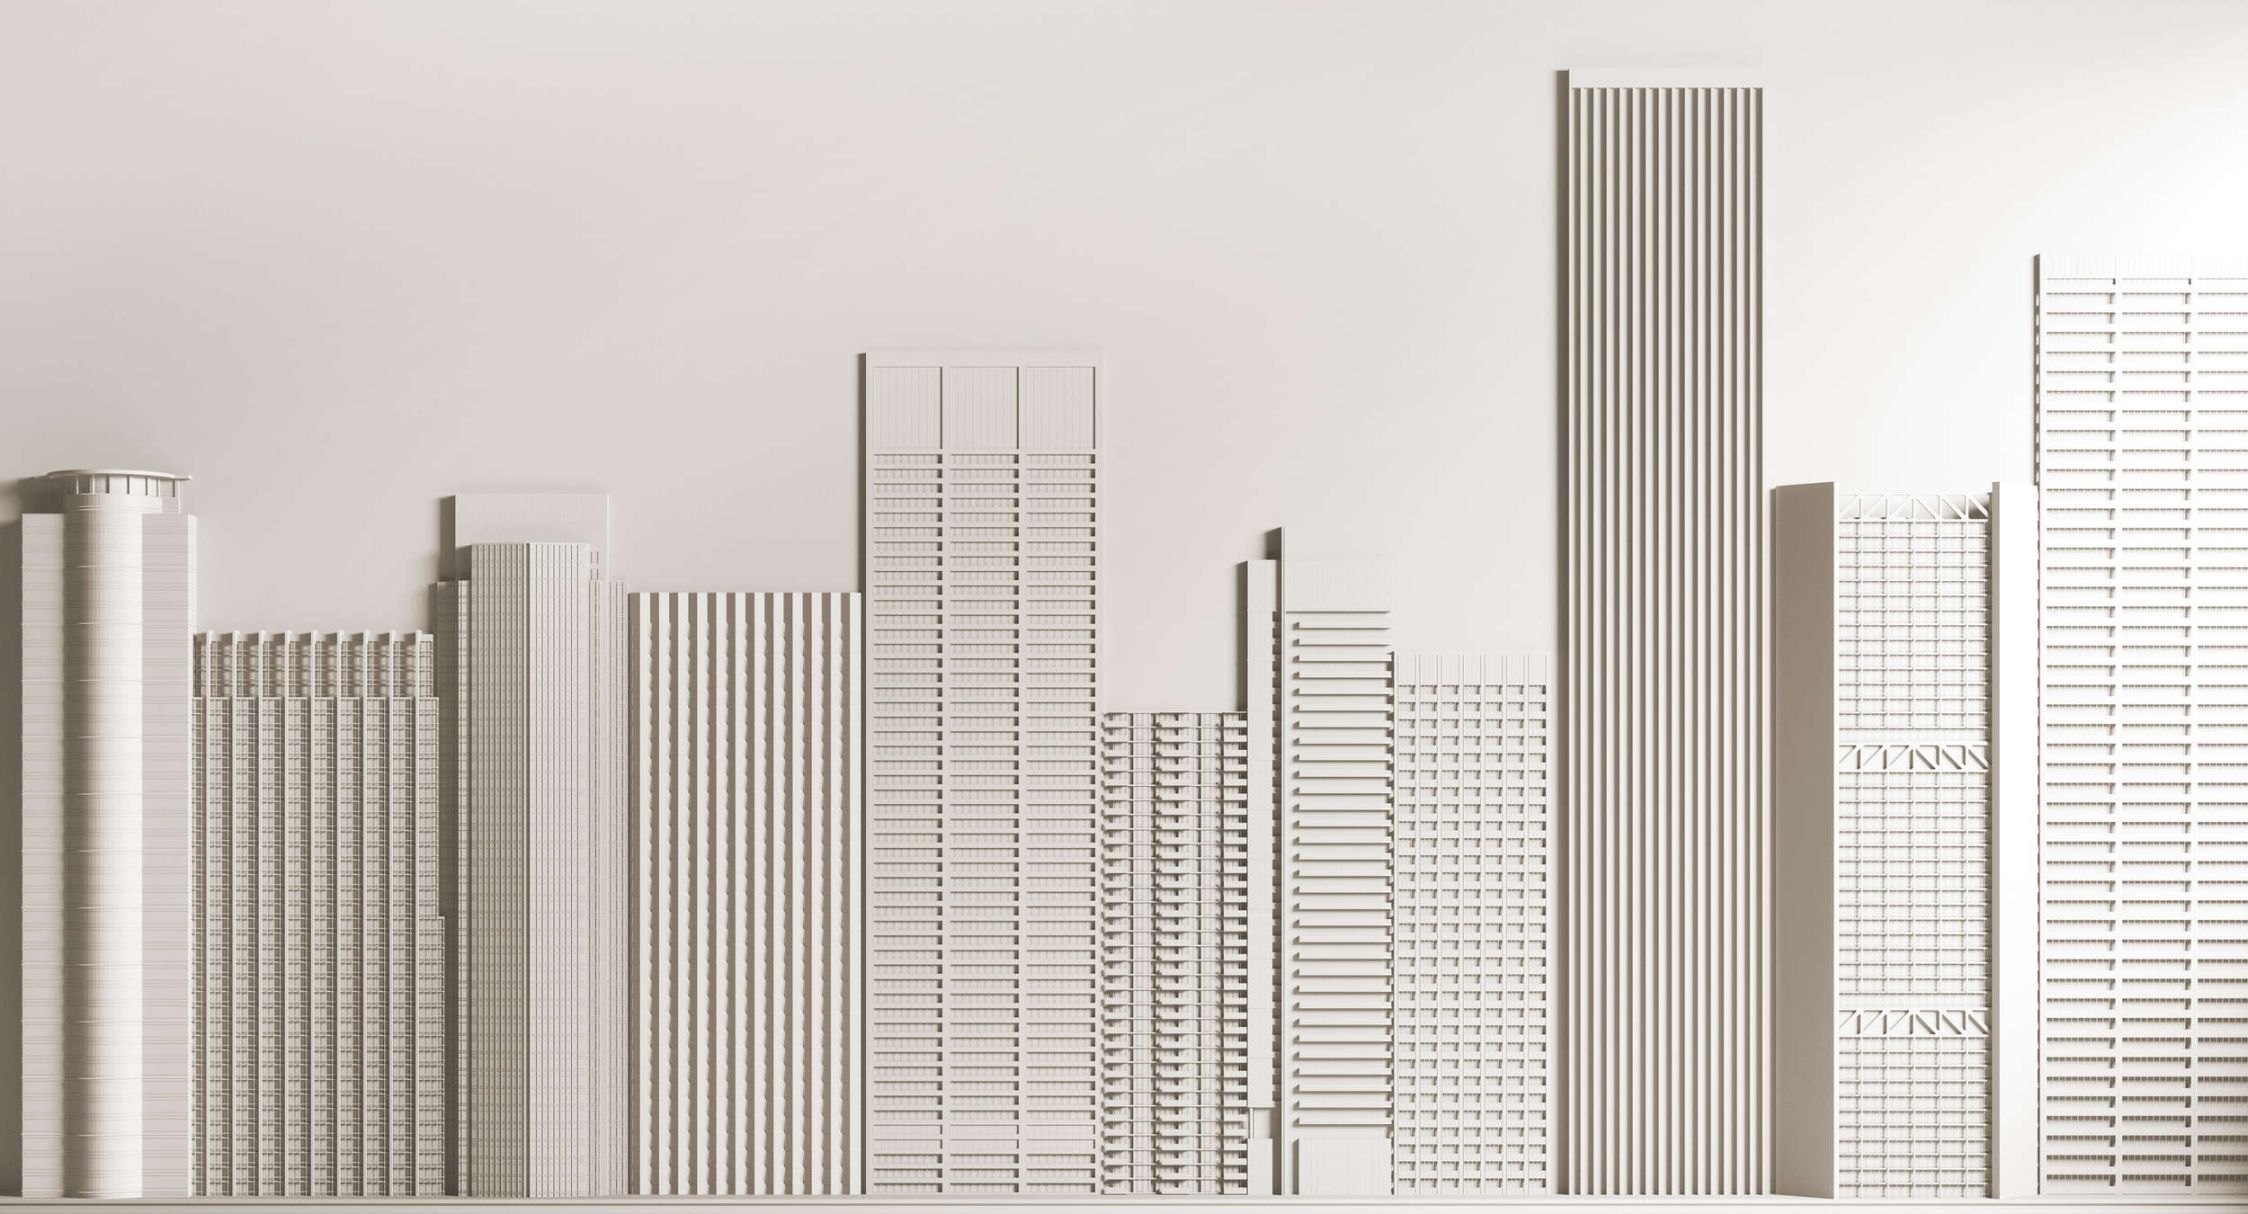             Photo wallpaper »new skyline« - architecture with skyscrapers - matt, smooth non-woven fabric
        